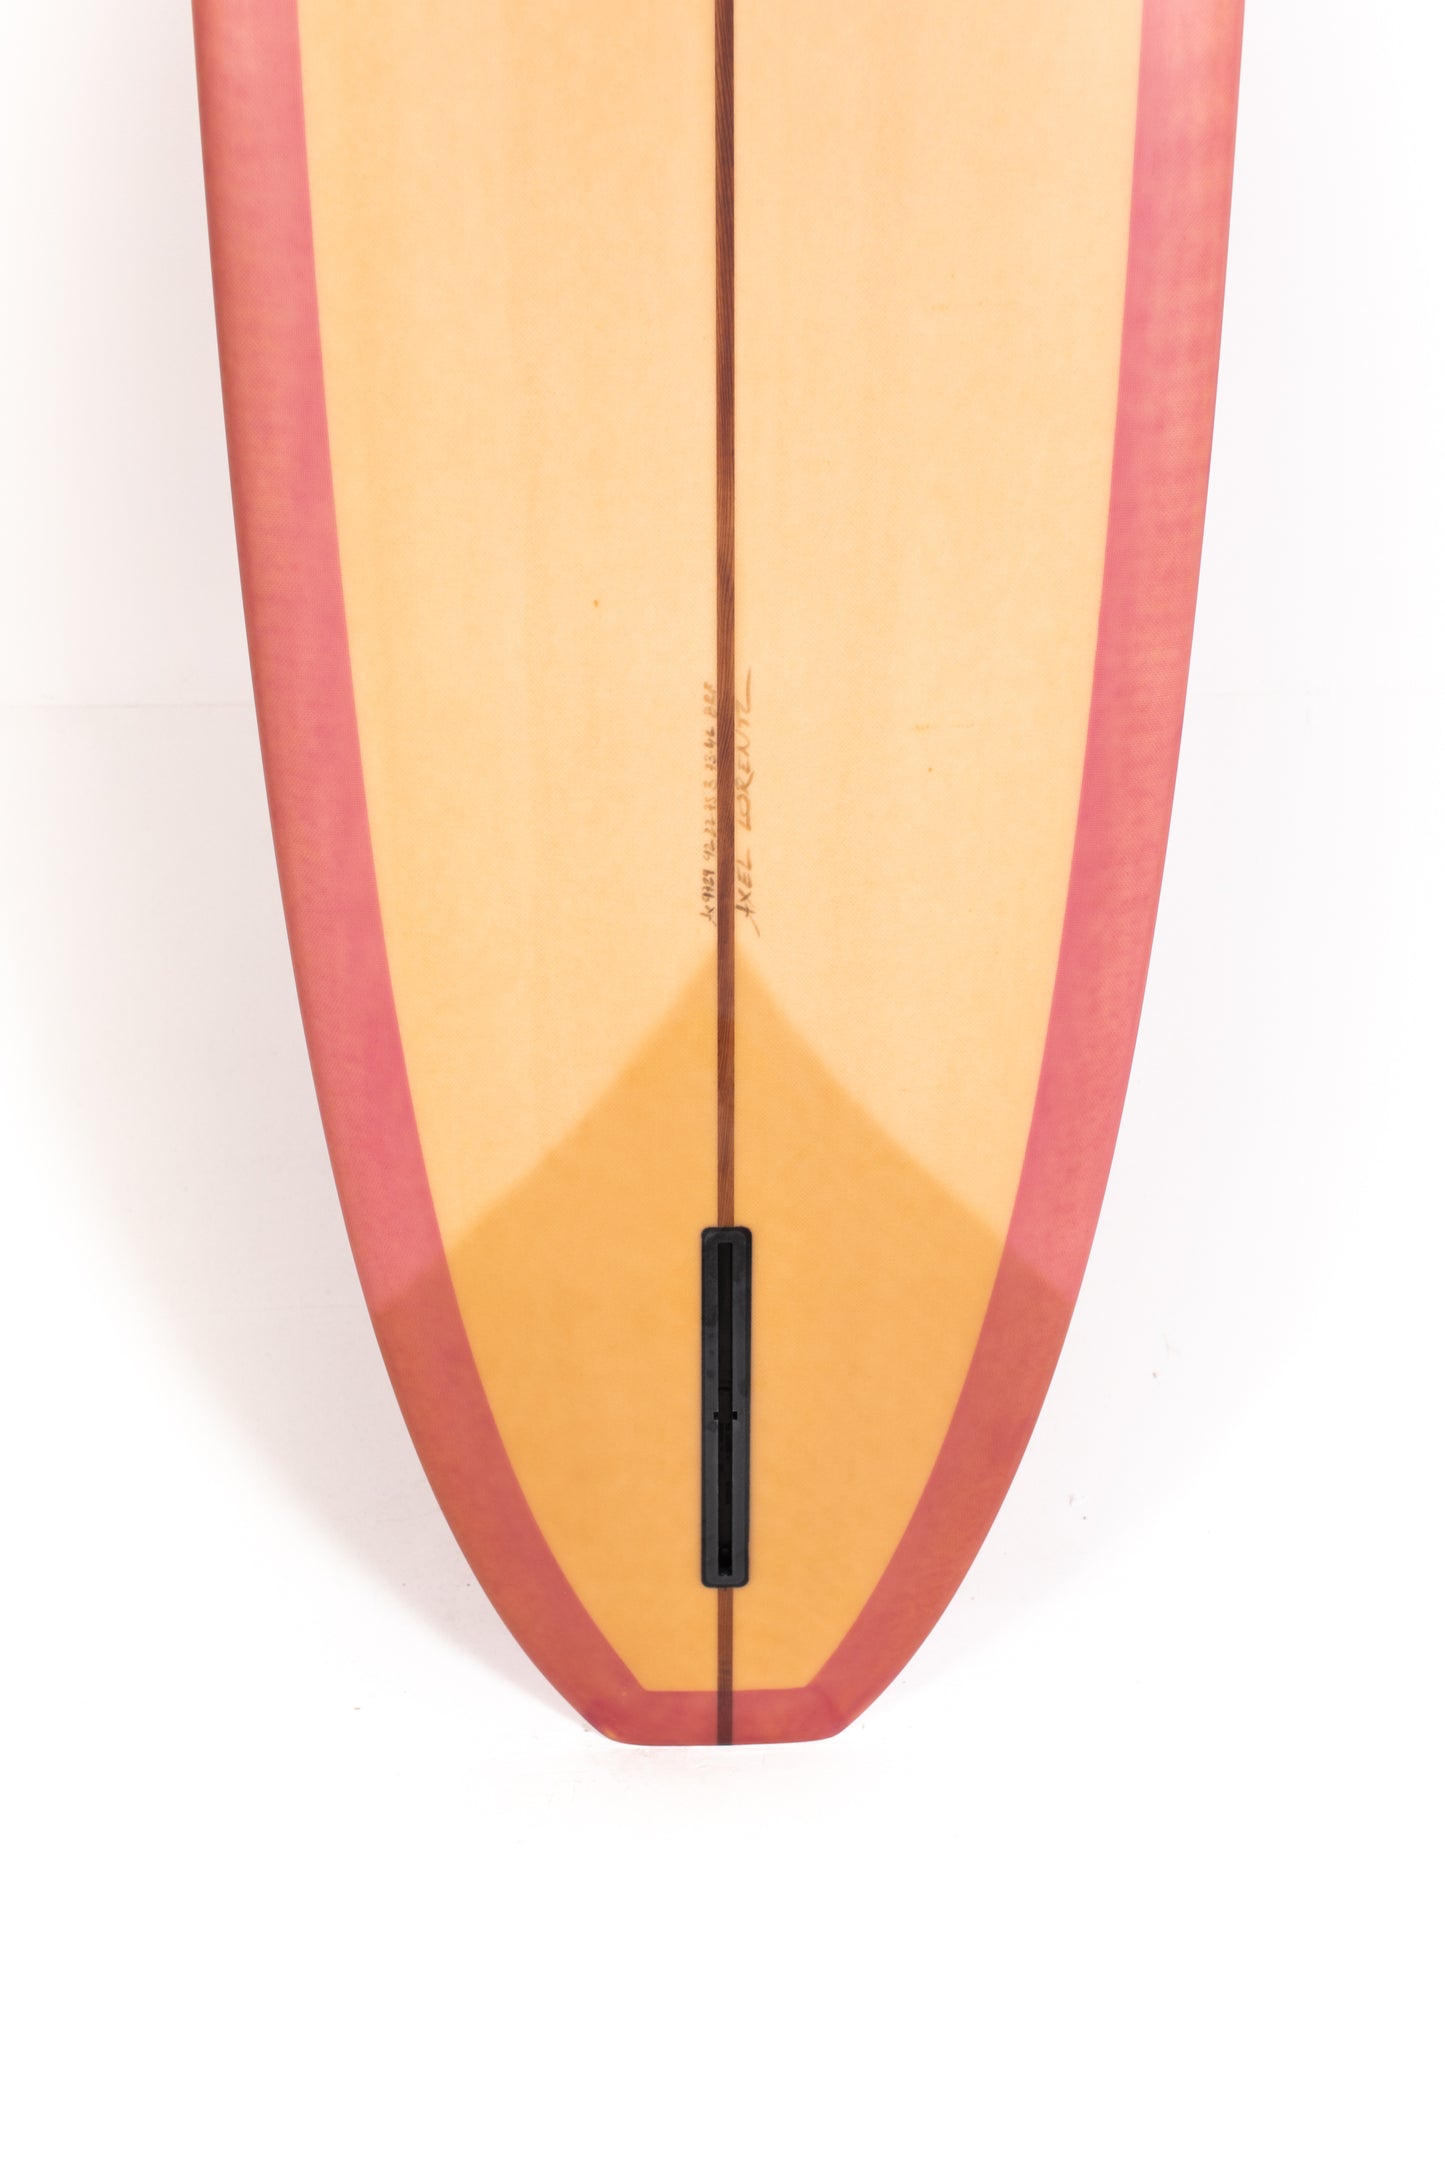 
                  
                    Pukas Surfboards - MAYFLOWER by Axel Lorentz -  9'2" x 22 3/4 x 3 x 73.33L - AX09729
                  
                